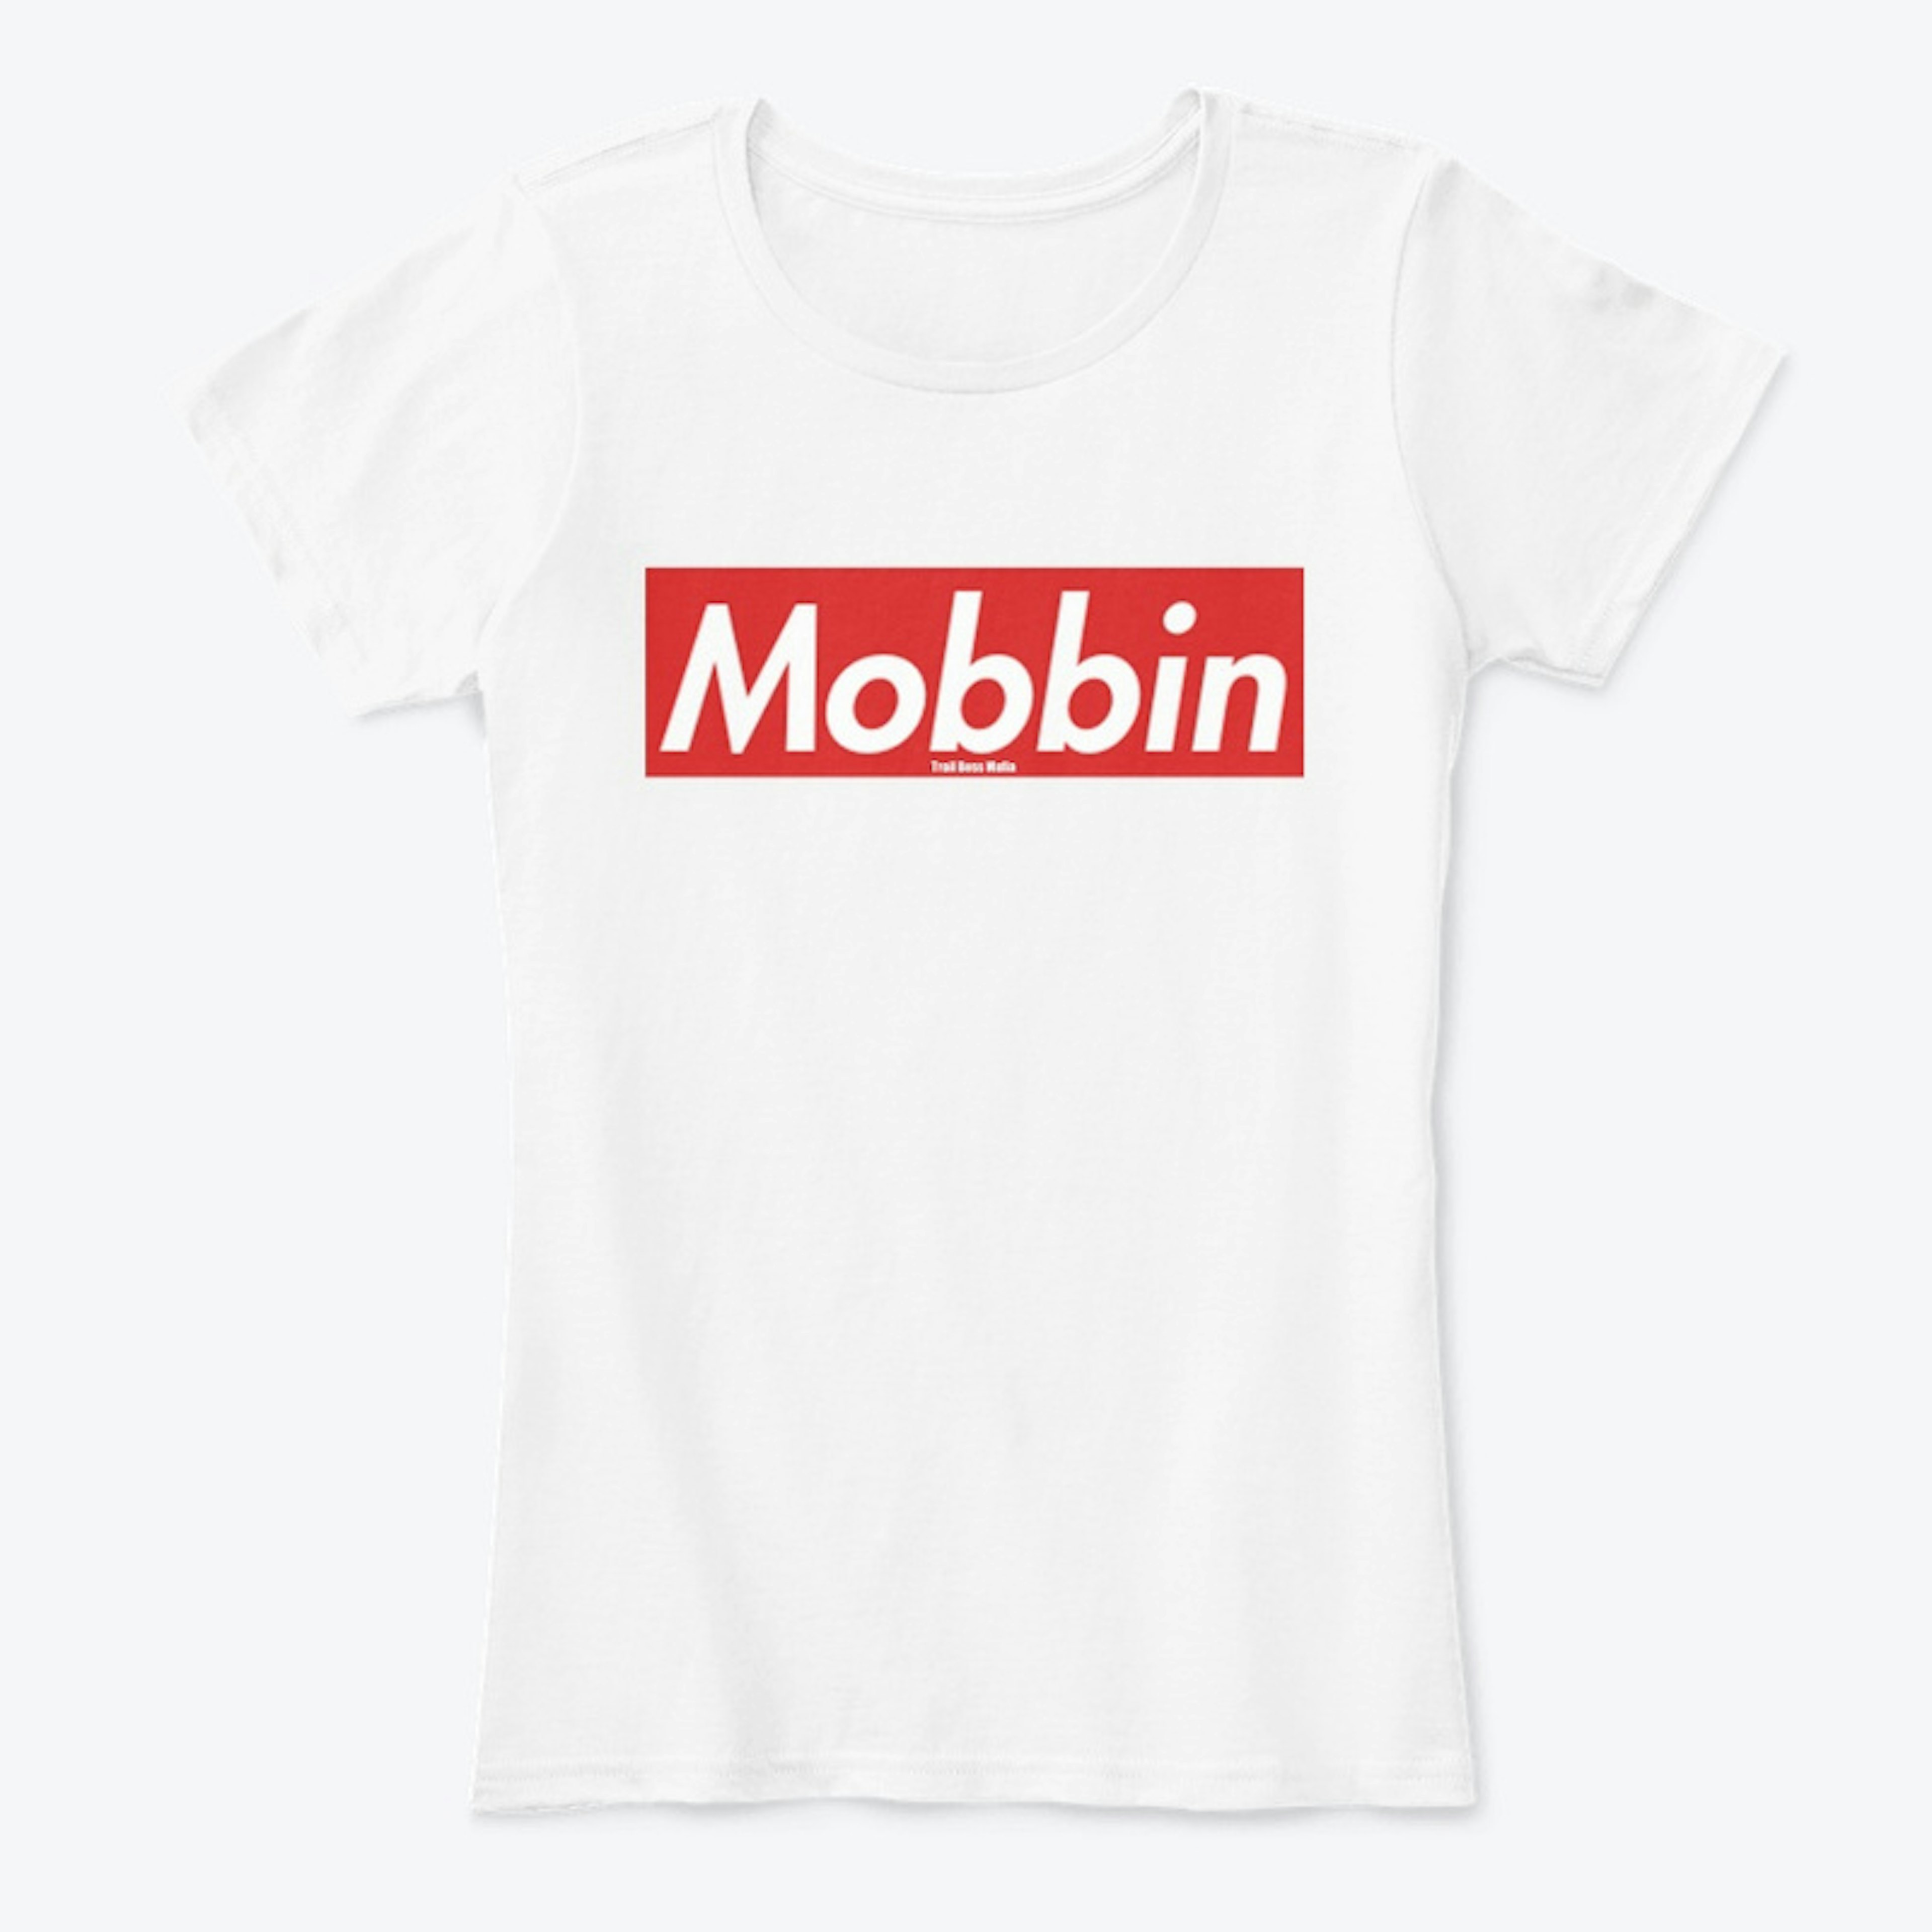 Mobbin